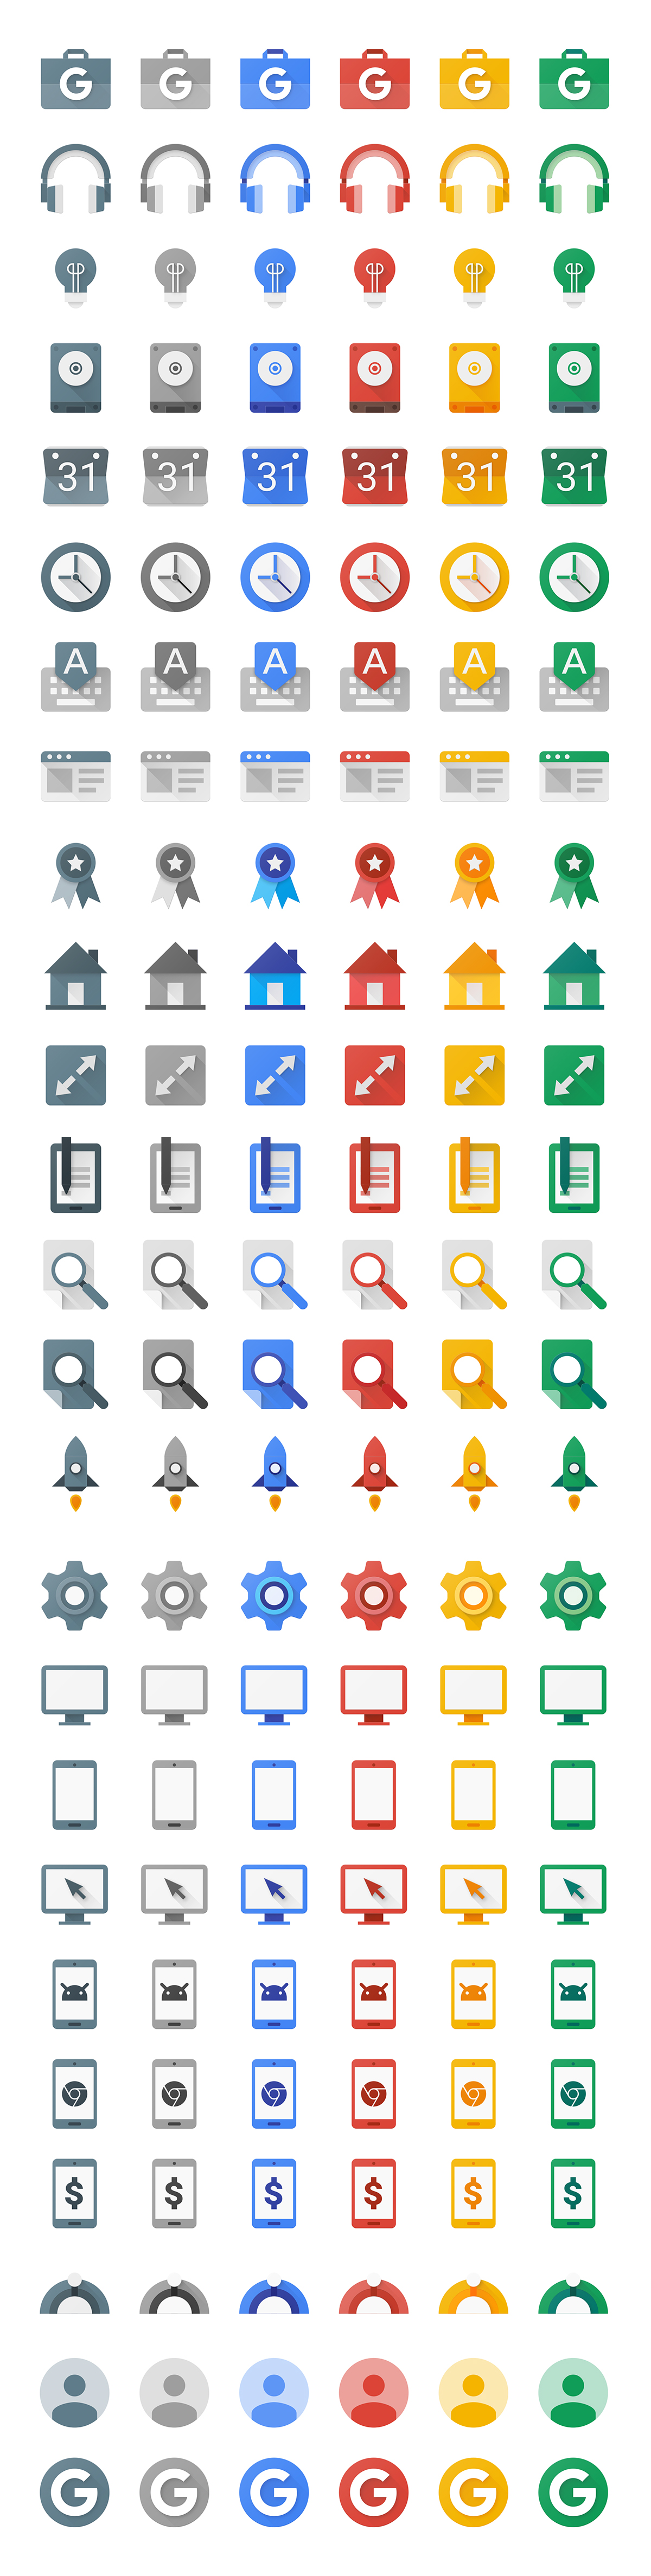 google material design material icons flat design vector